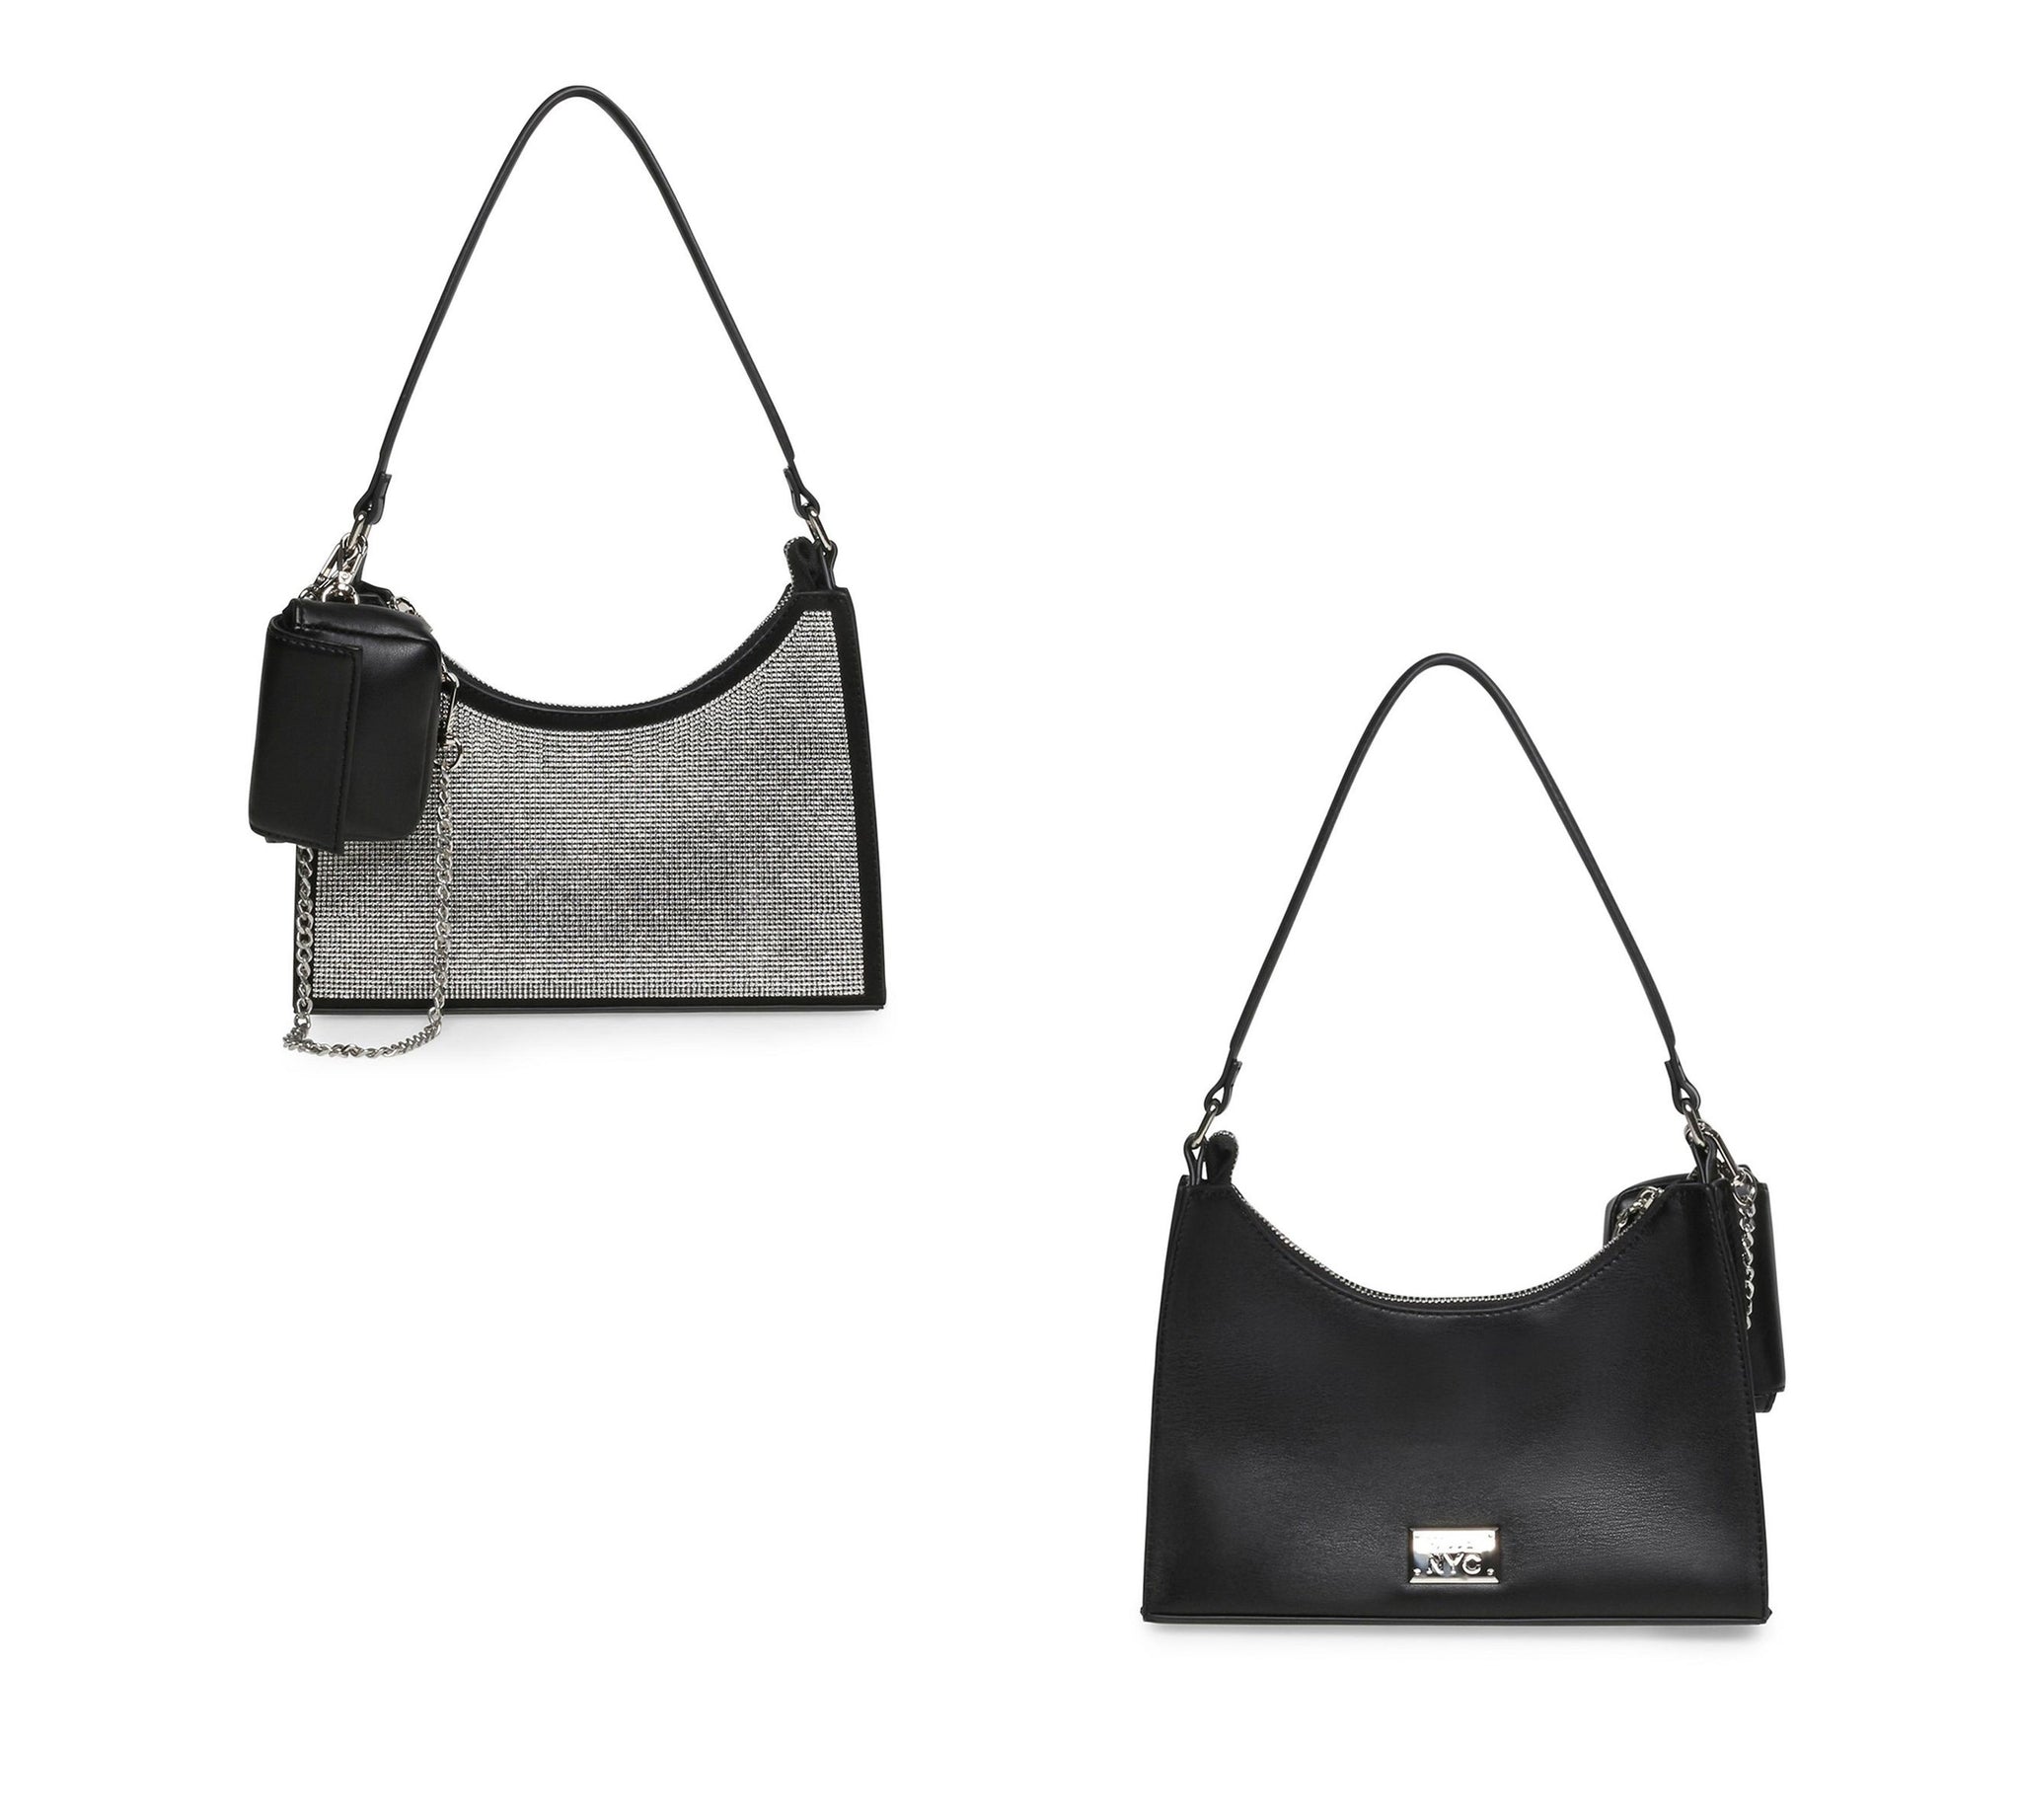 Hammitt Daniel Rivet Large Black Studded Leather Satchel Bag | Dillard's